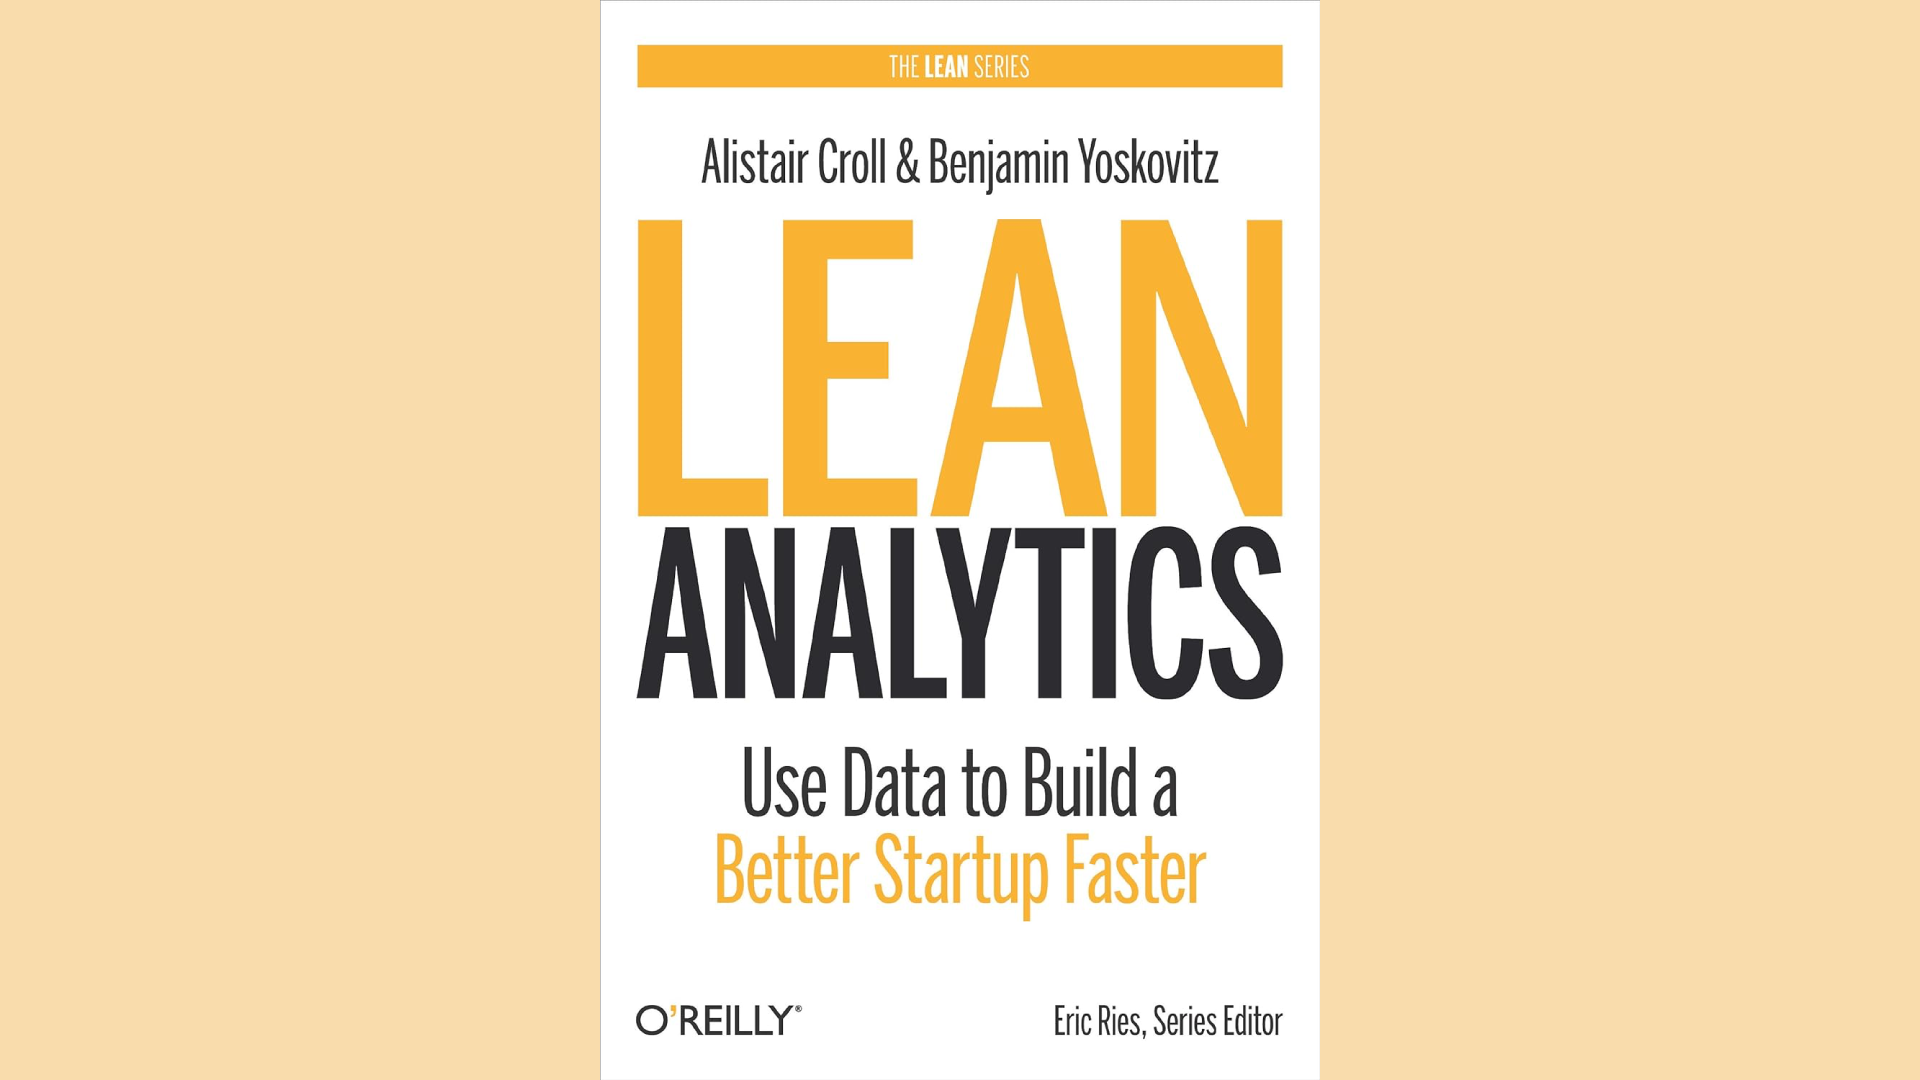 Summary: Lean Analytics by Alistair Croll and Benjamin Yoskovitz